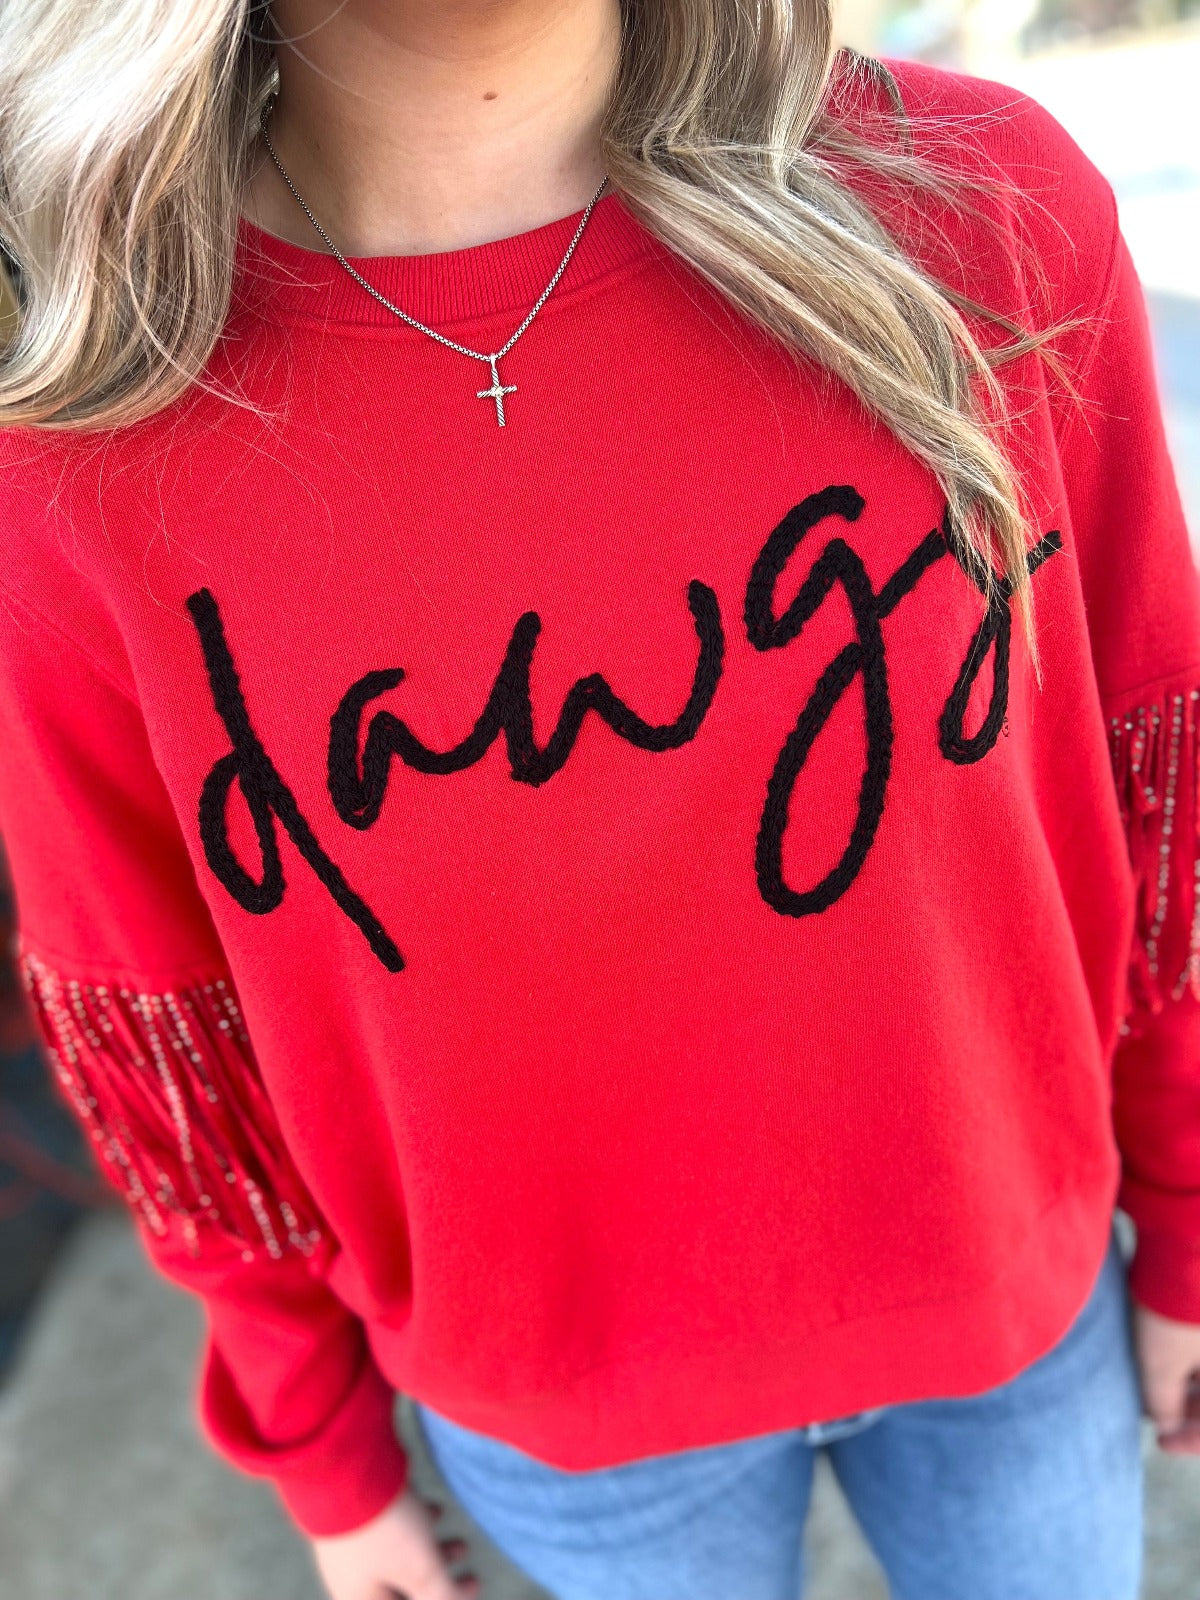 The Dawgs Fringe Sweatshirt